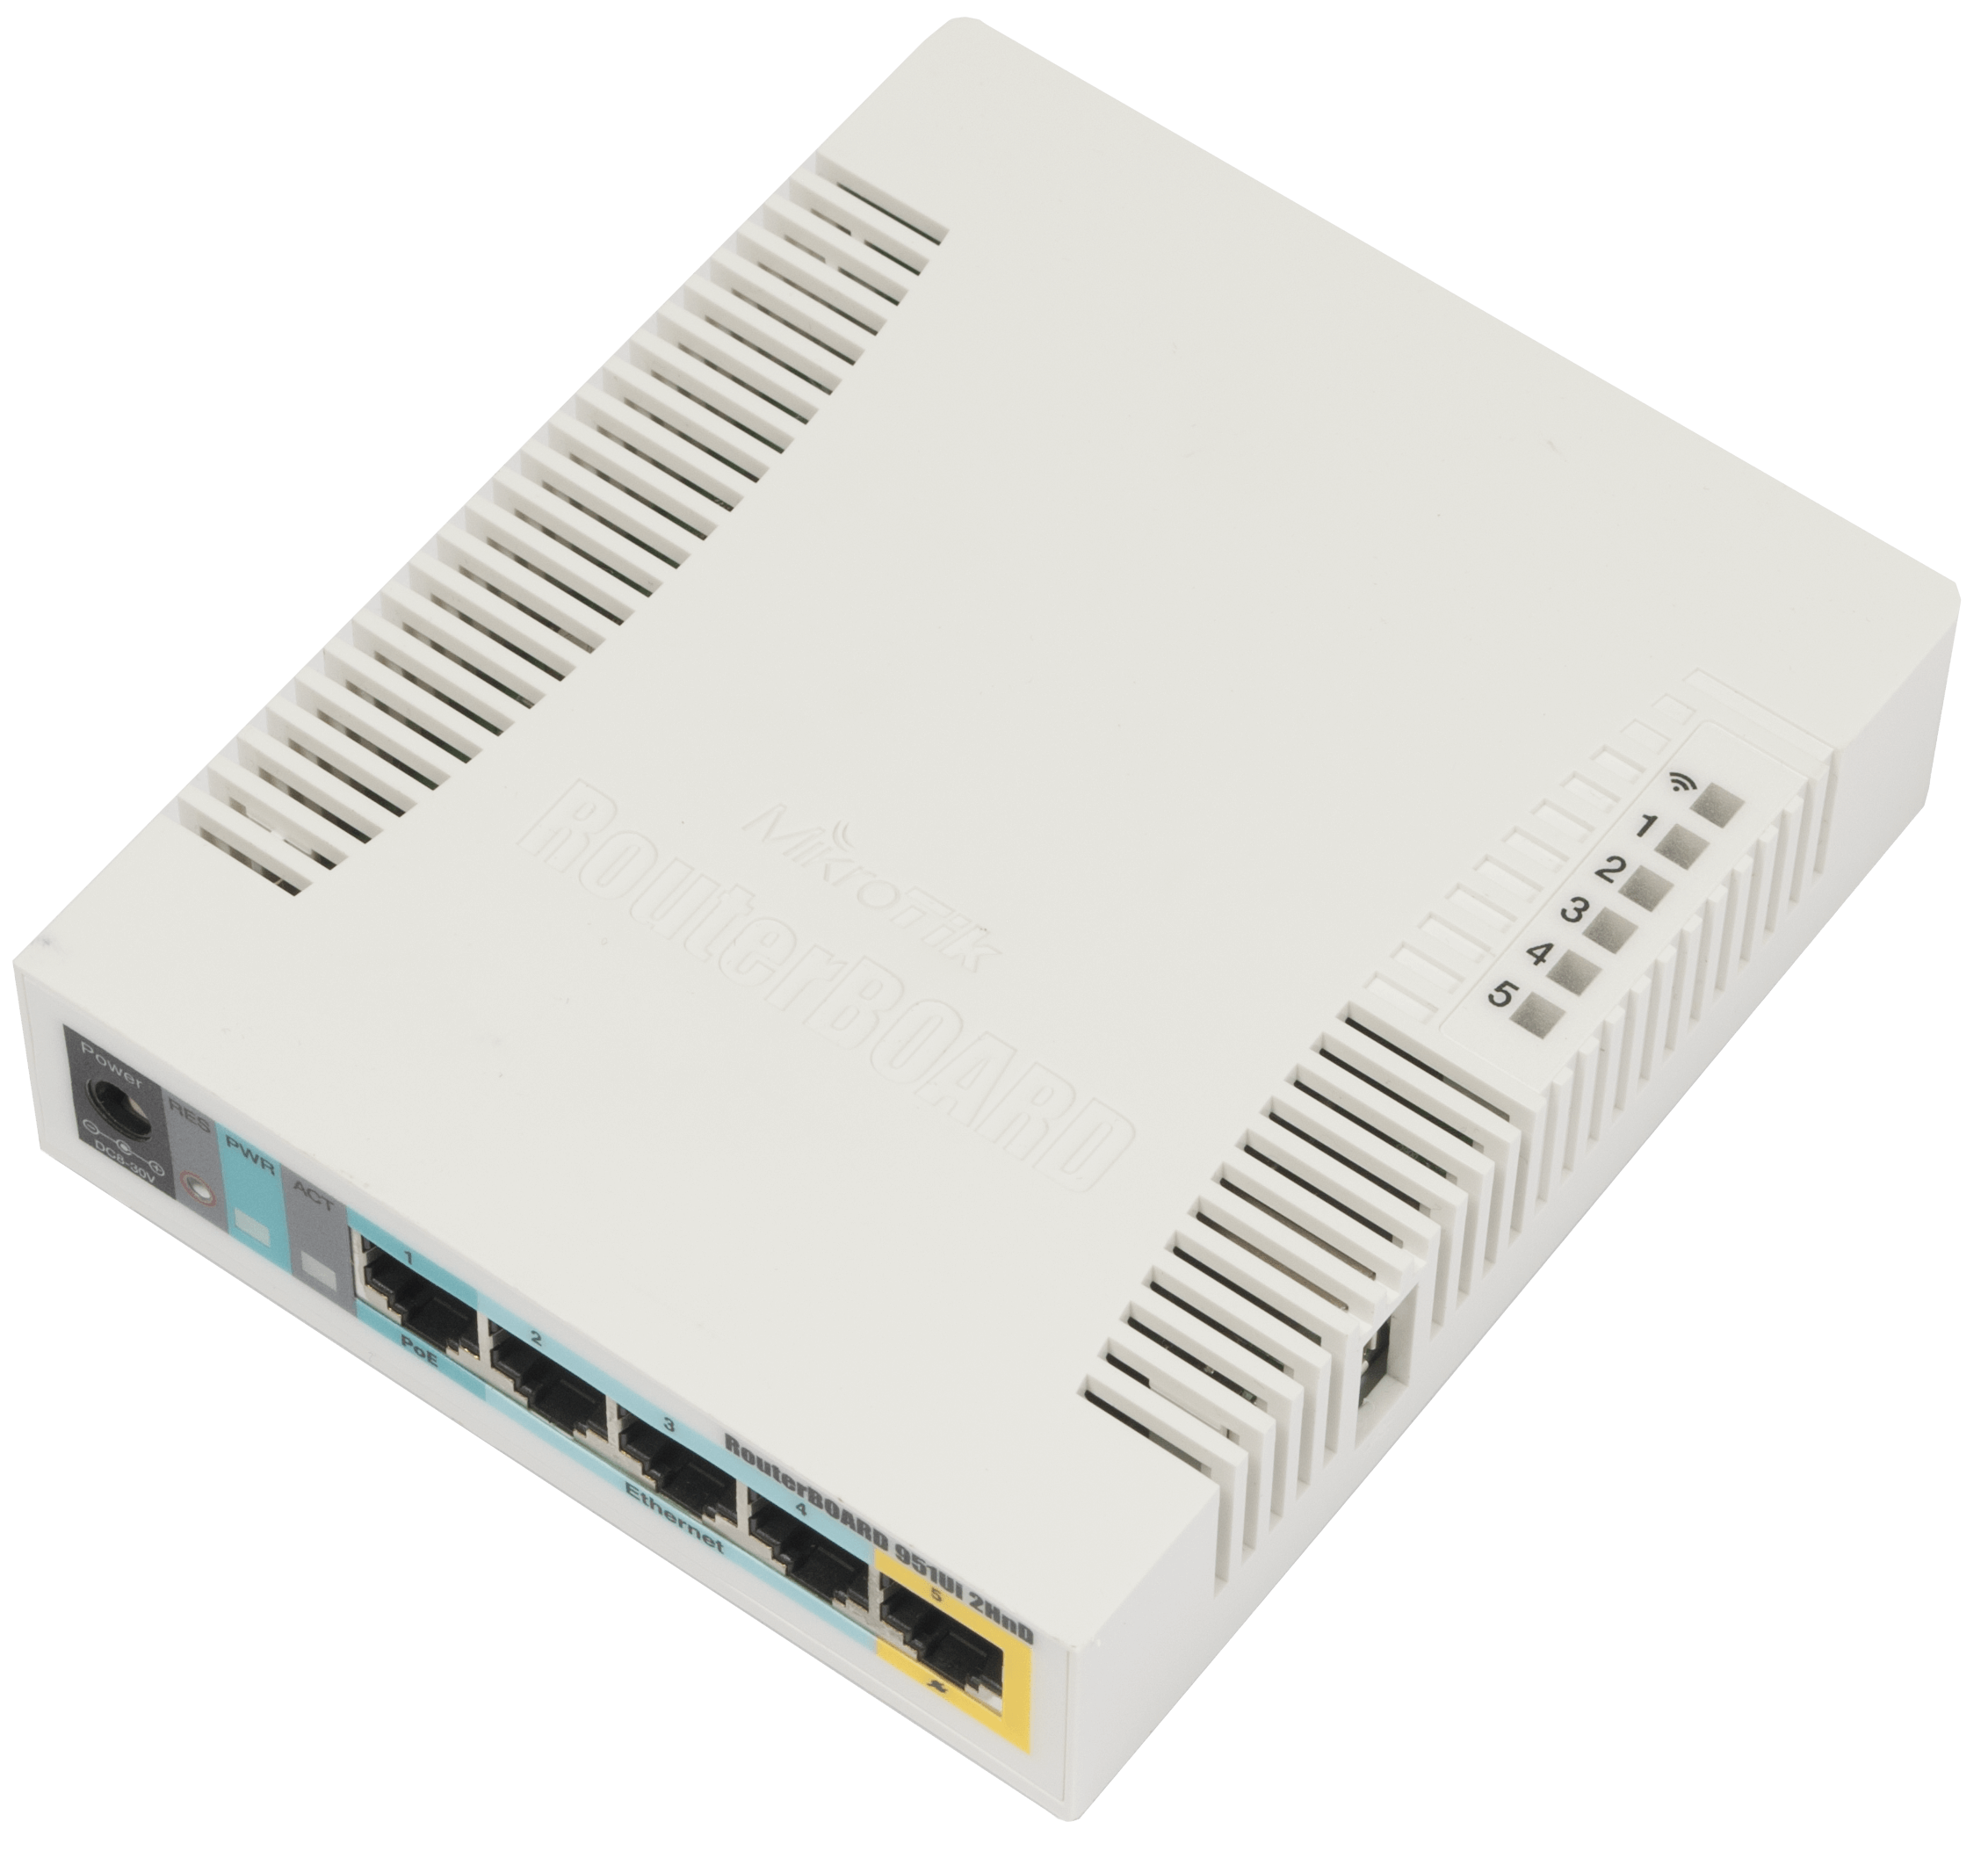 MikroTik RB951Ui-2HnD - 2.4GHz high power desktop Wi-Fi Router